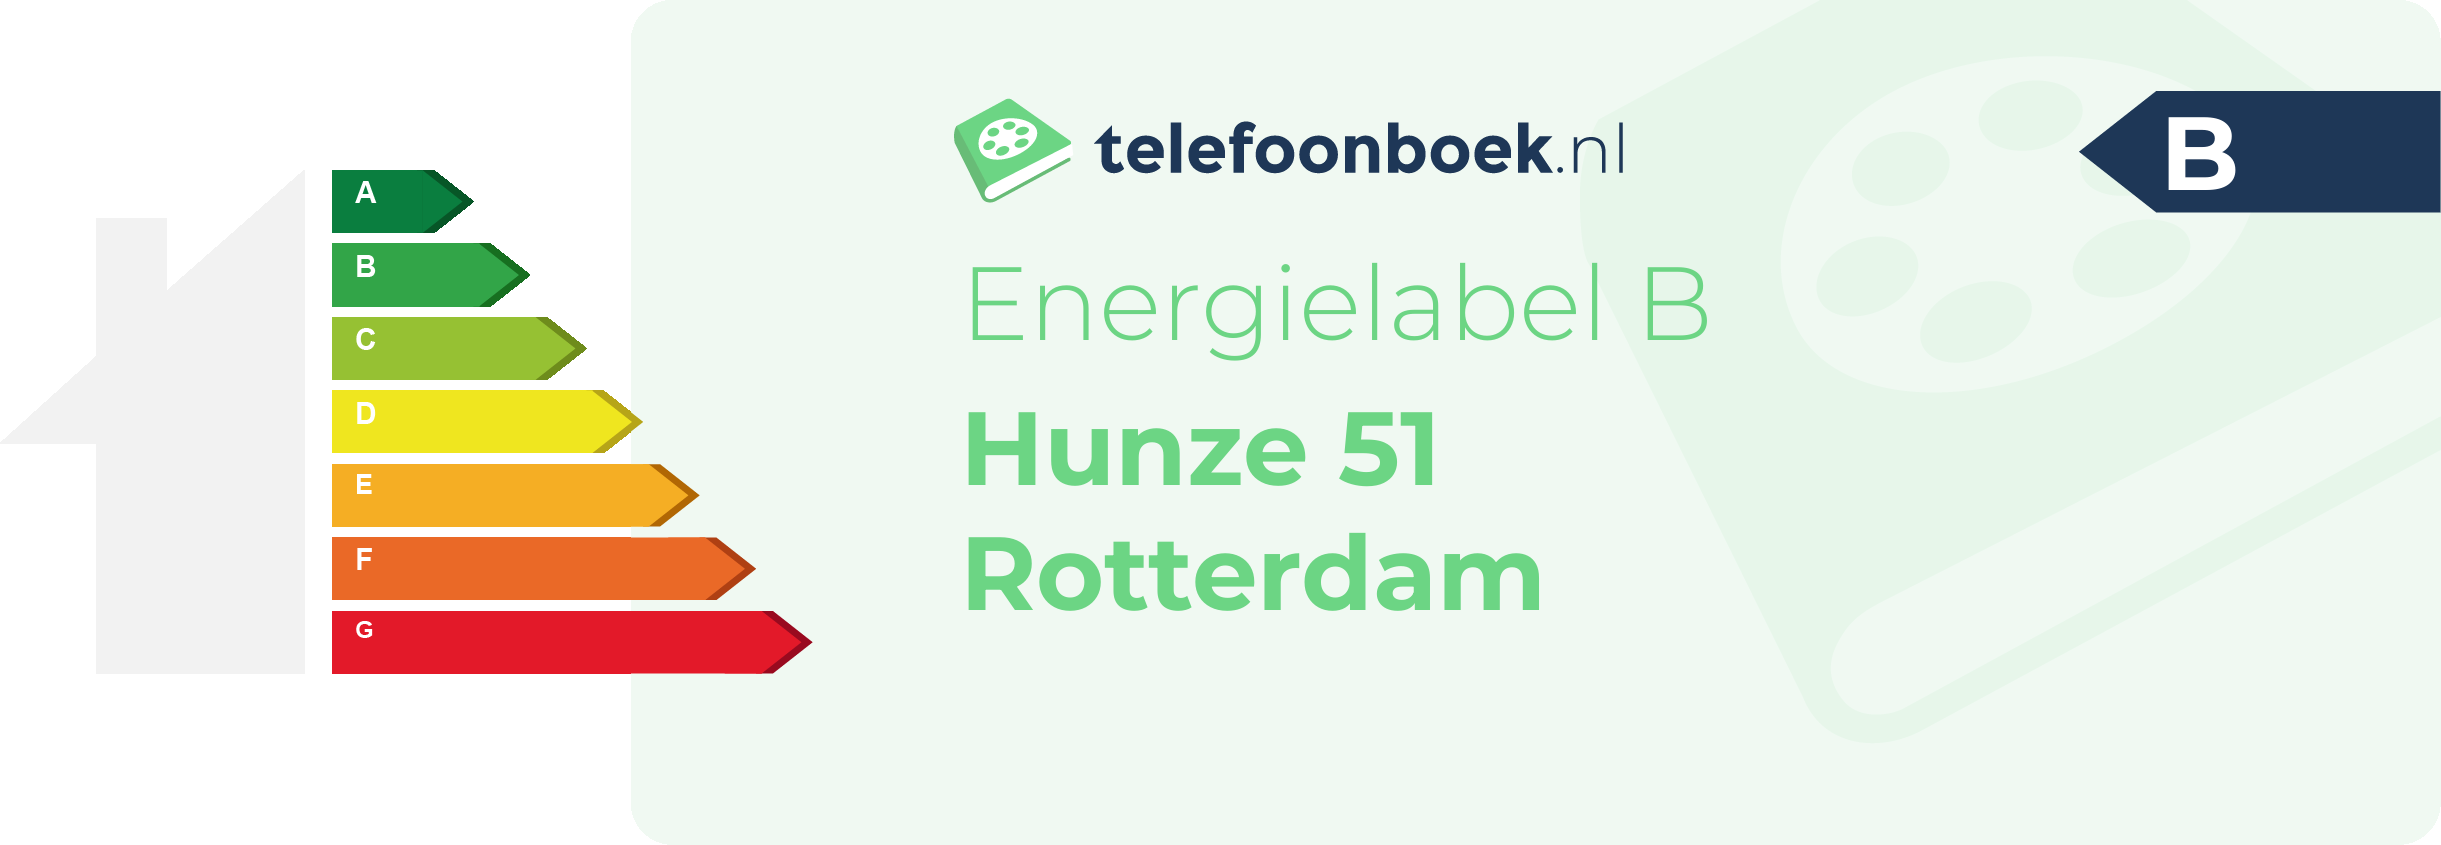 Energielabel Hunze 51 Rotterdam